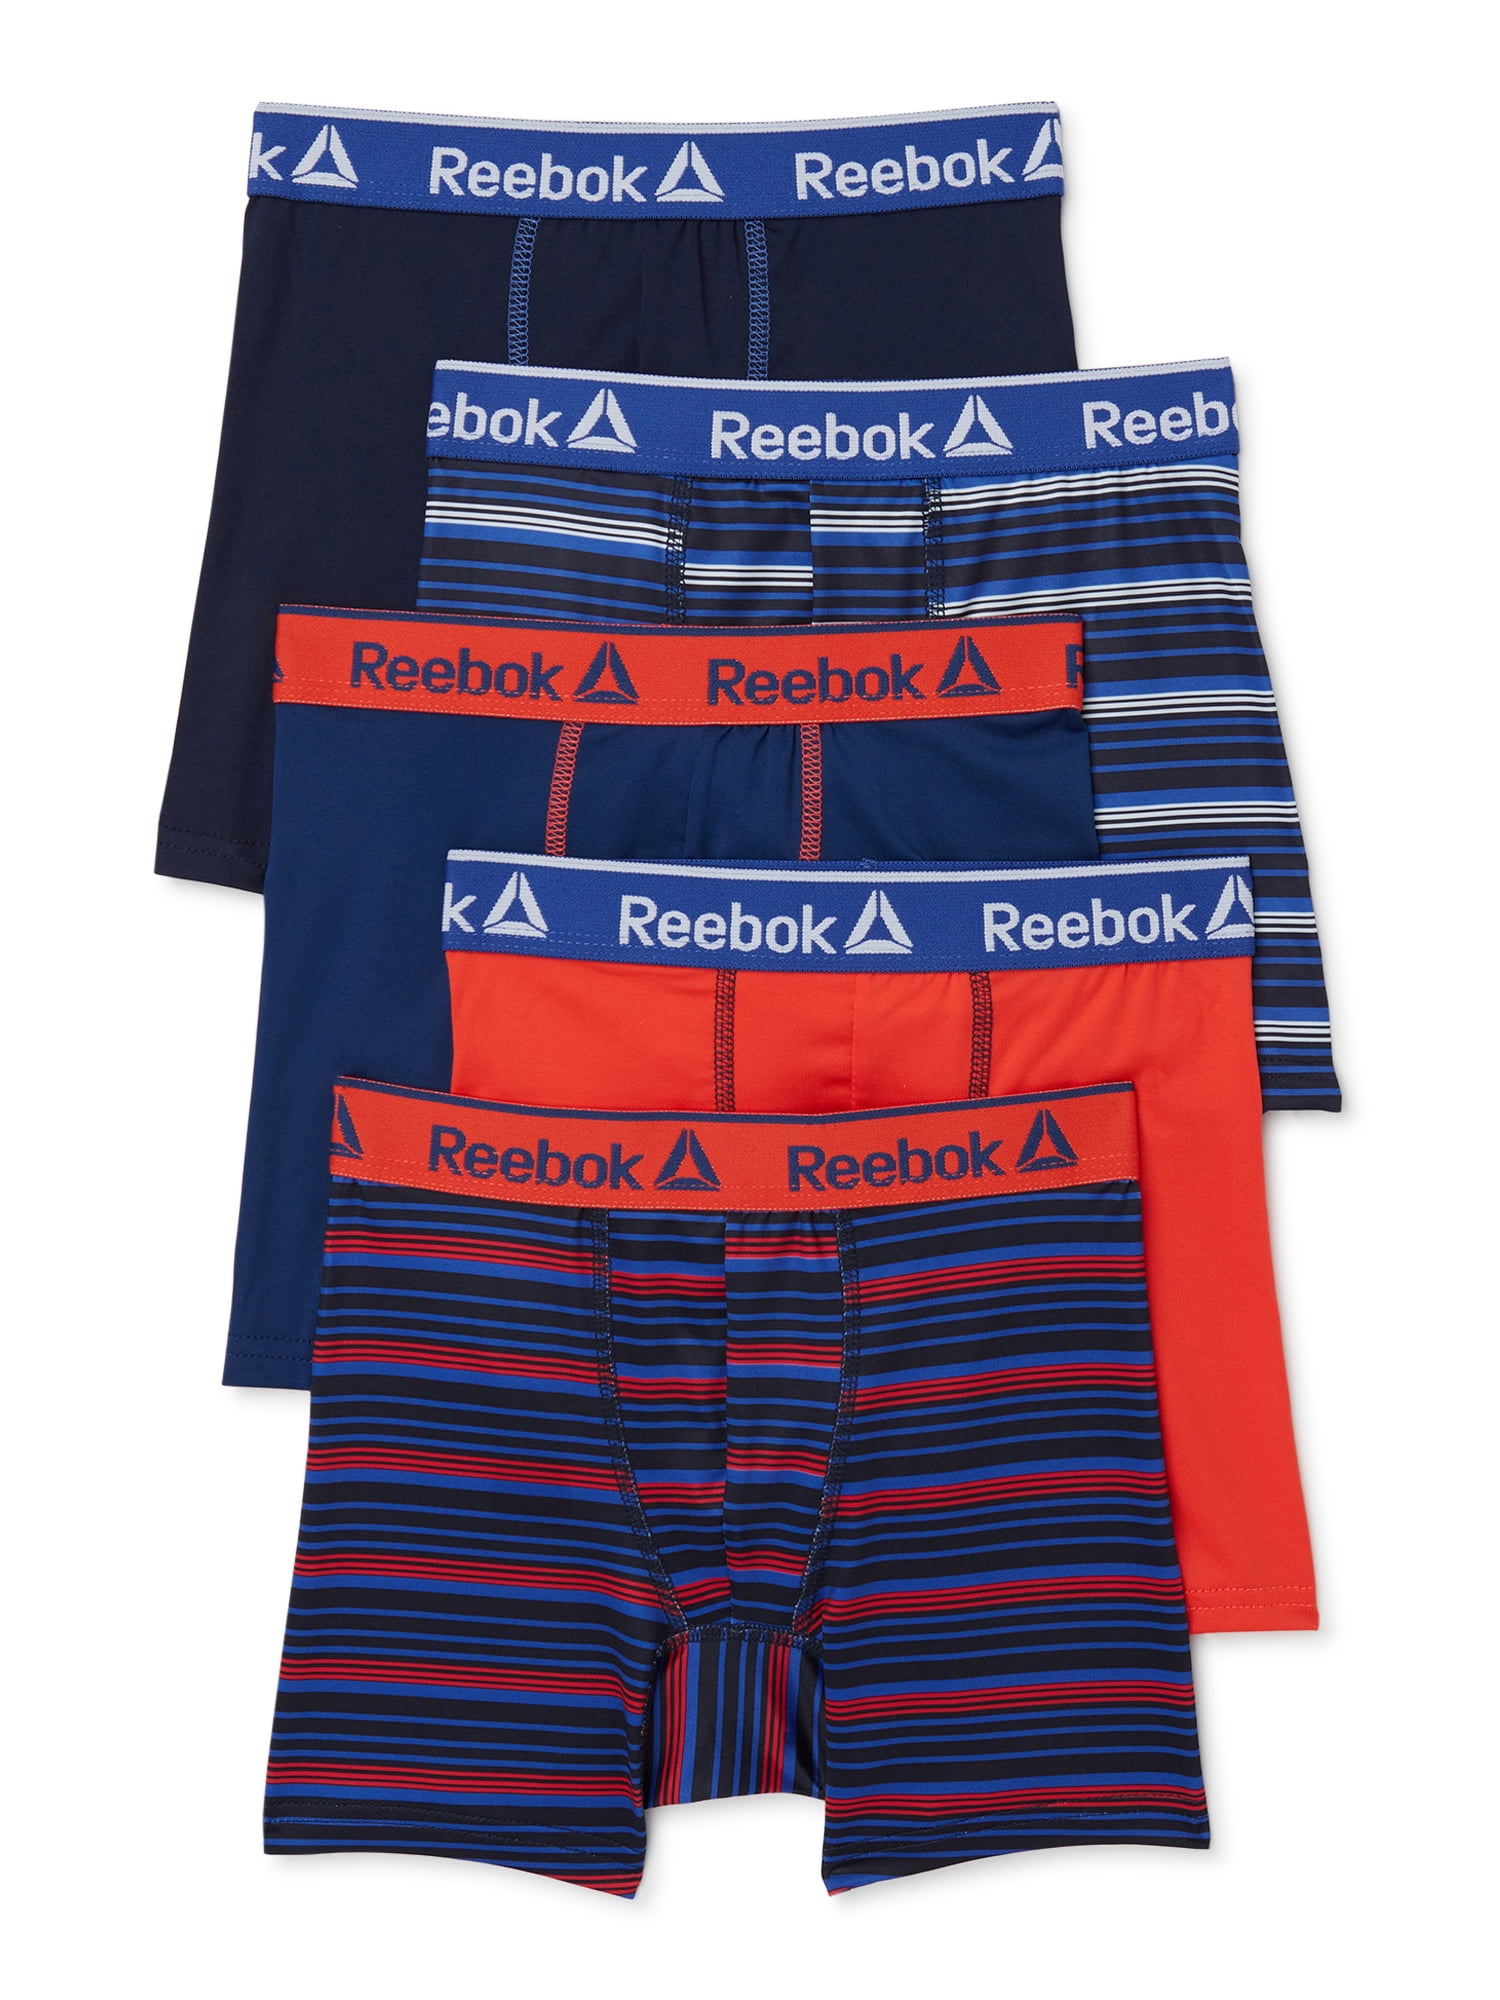 Reebok Boys Underwear Performance Boxer Briefs, Large, 5-Pack 